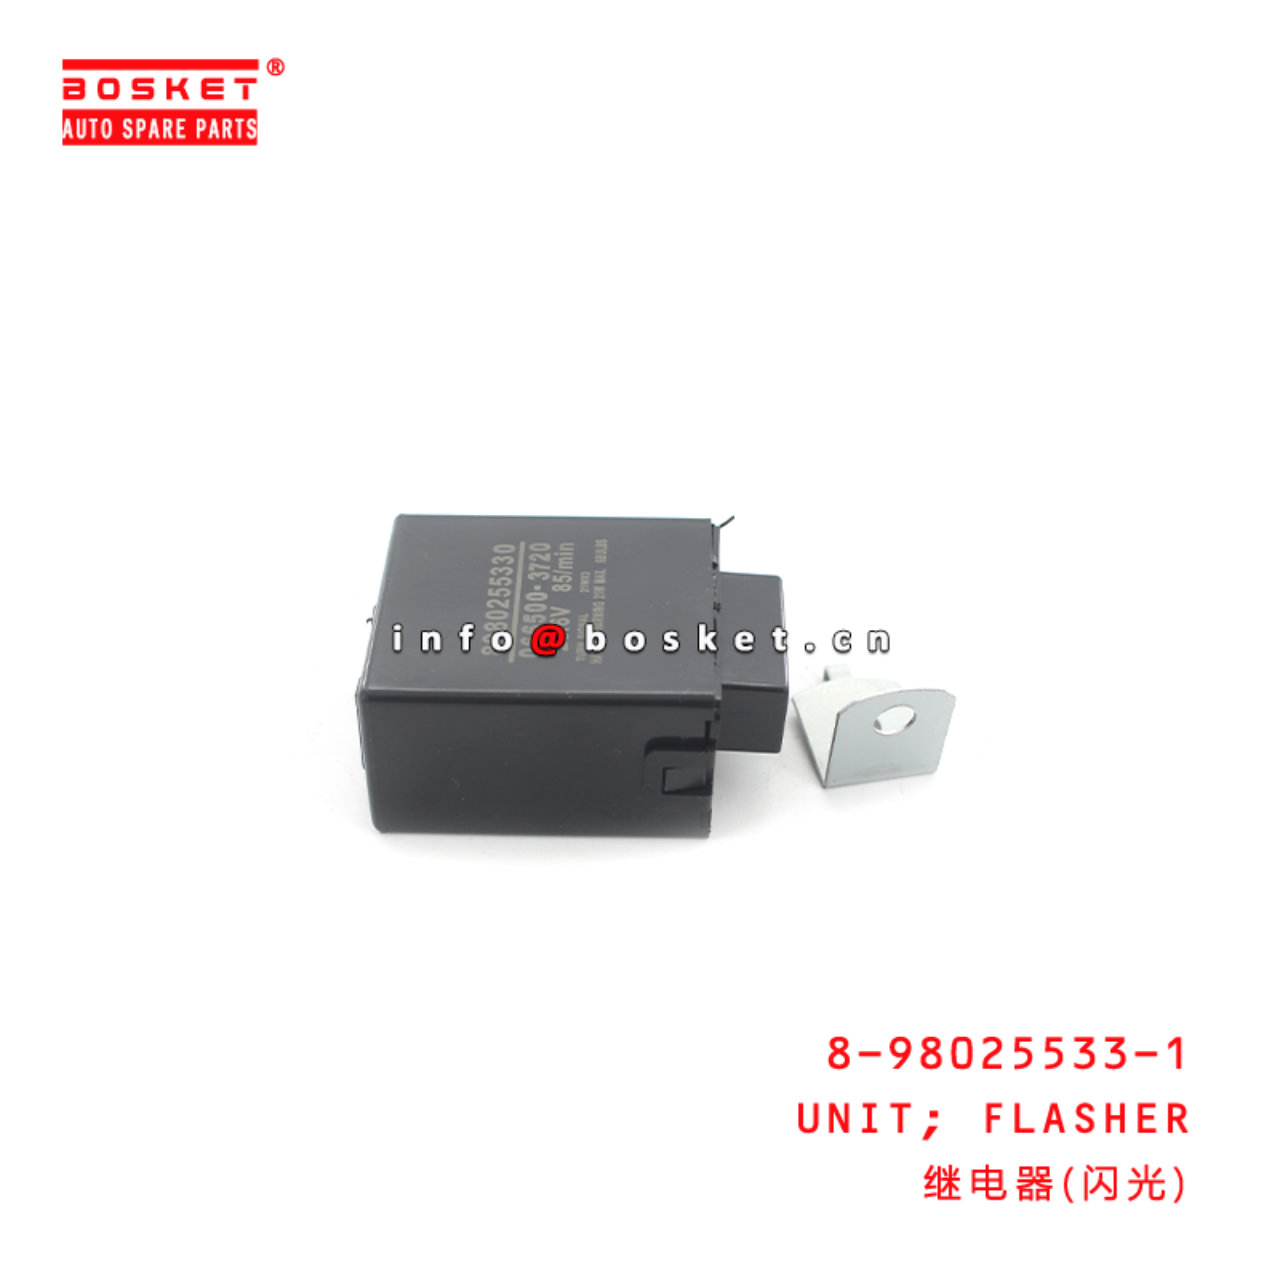 8-98025533-1 Flasher Unit Suitable for ISUZU 700P VC46 8980255331